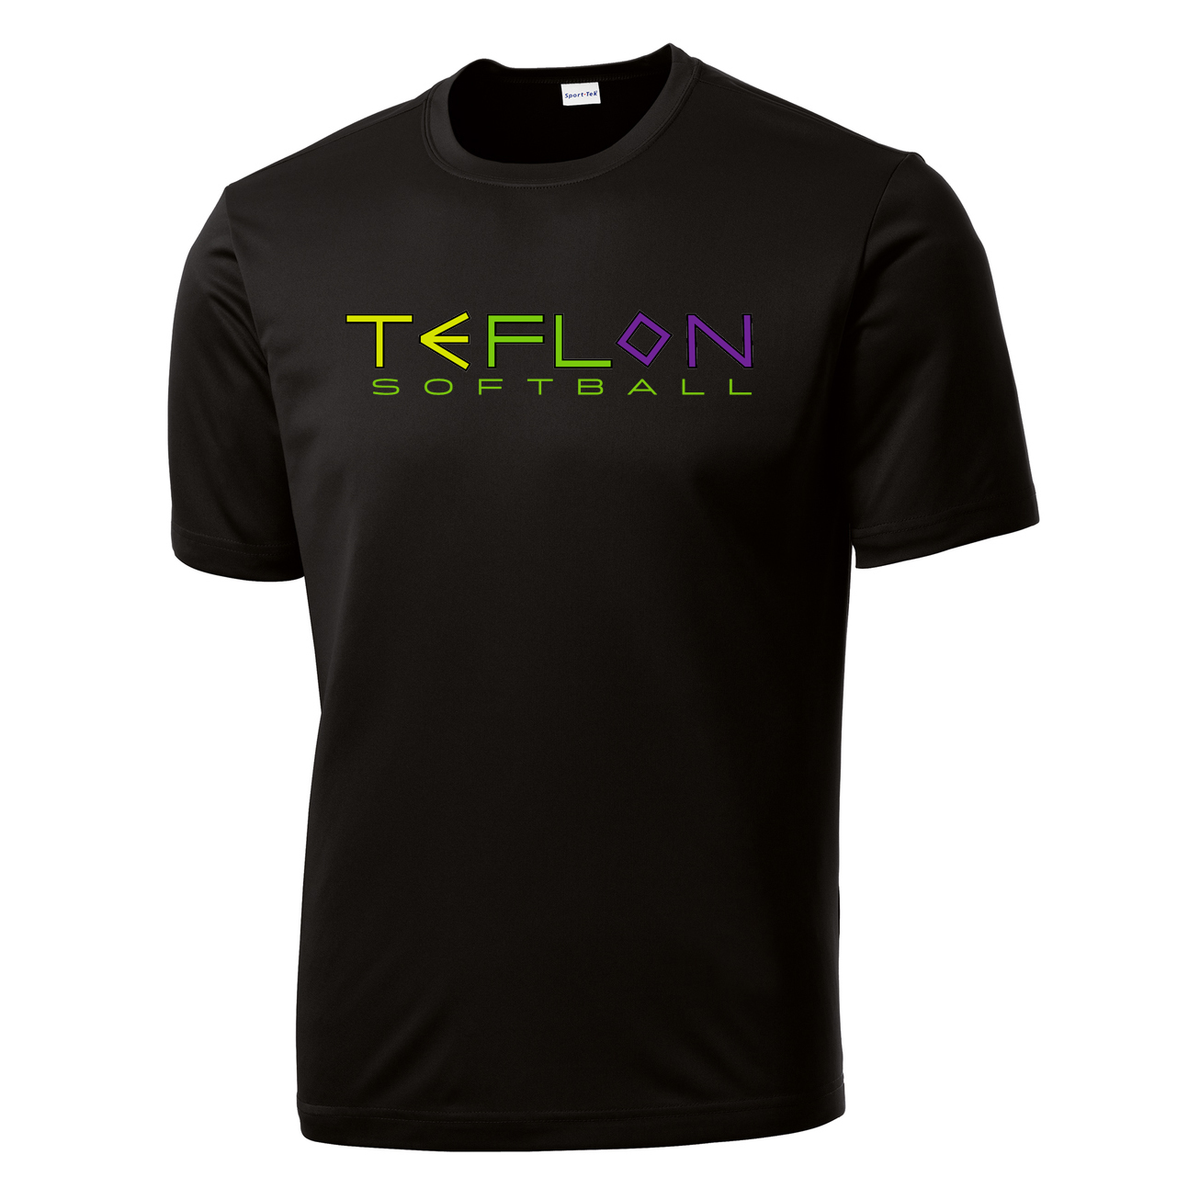 Team Teflon Softball Performance T-Shirt